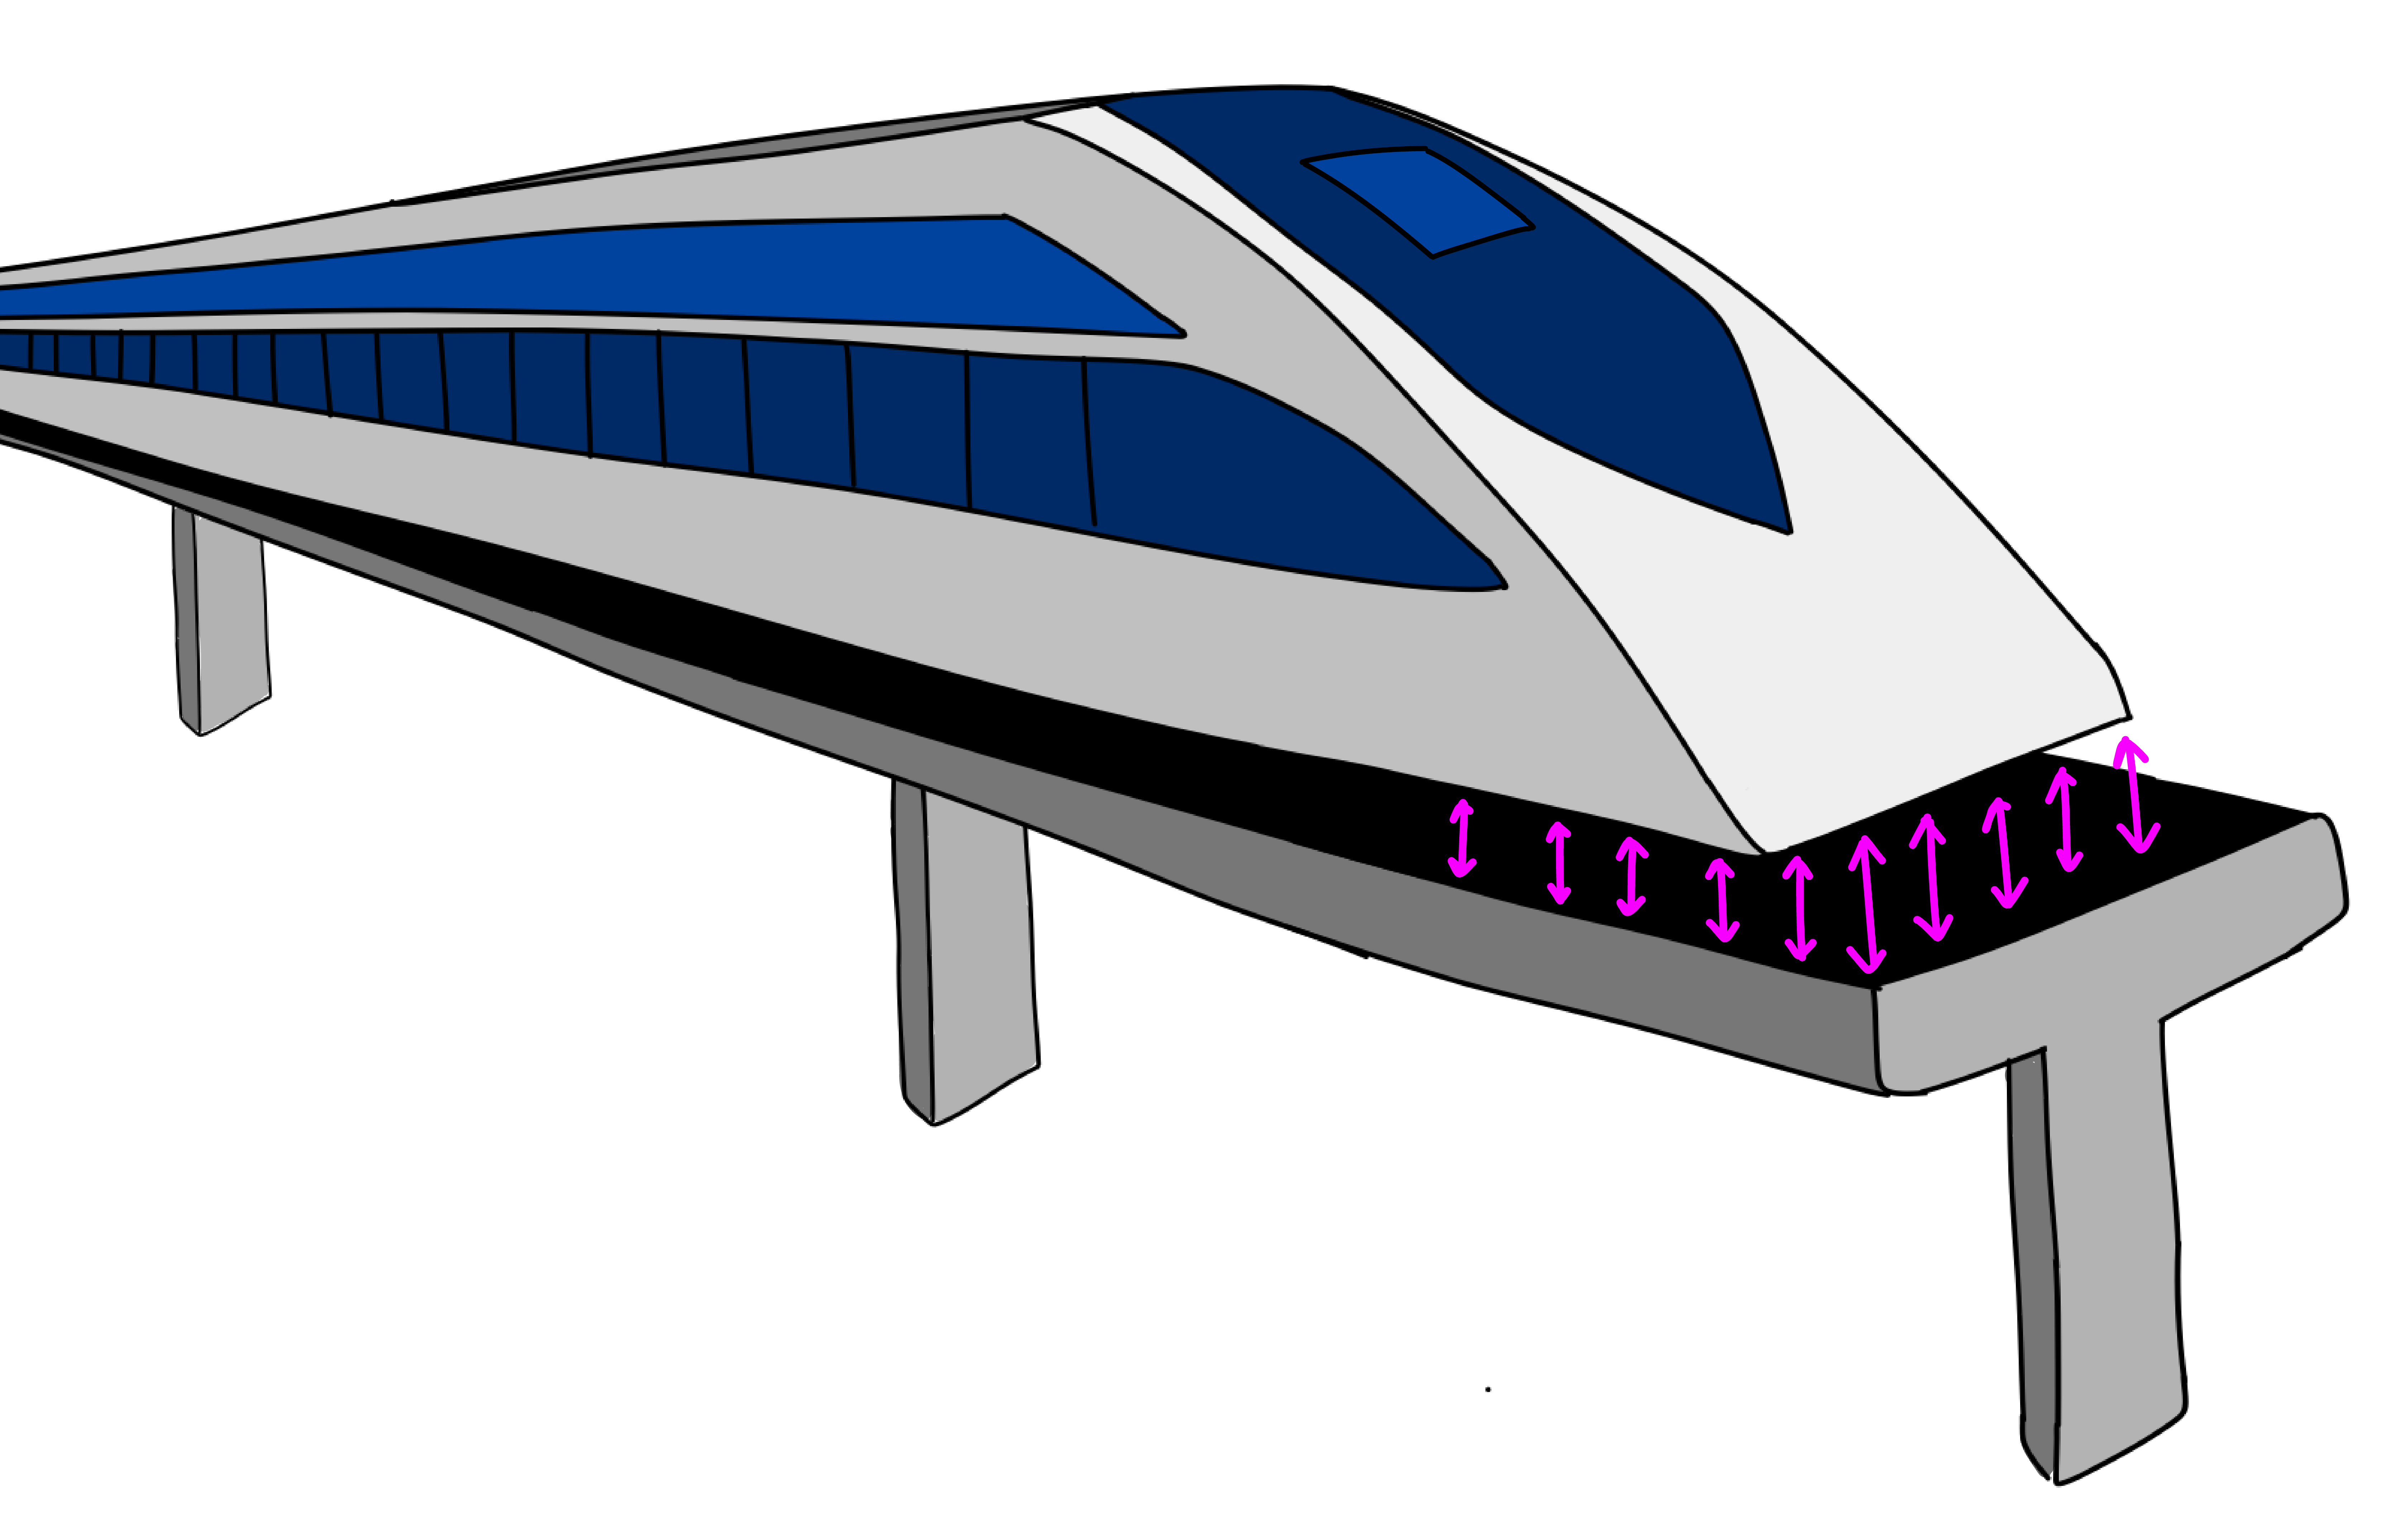 a cartoon of a futuristic-looking levitating train